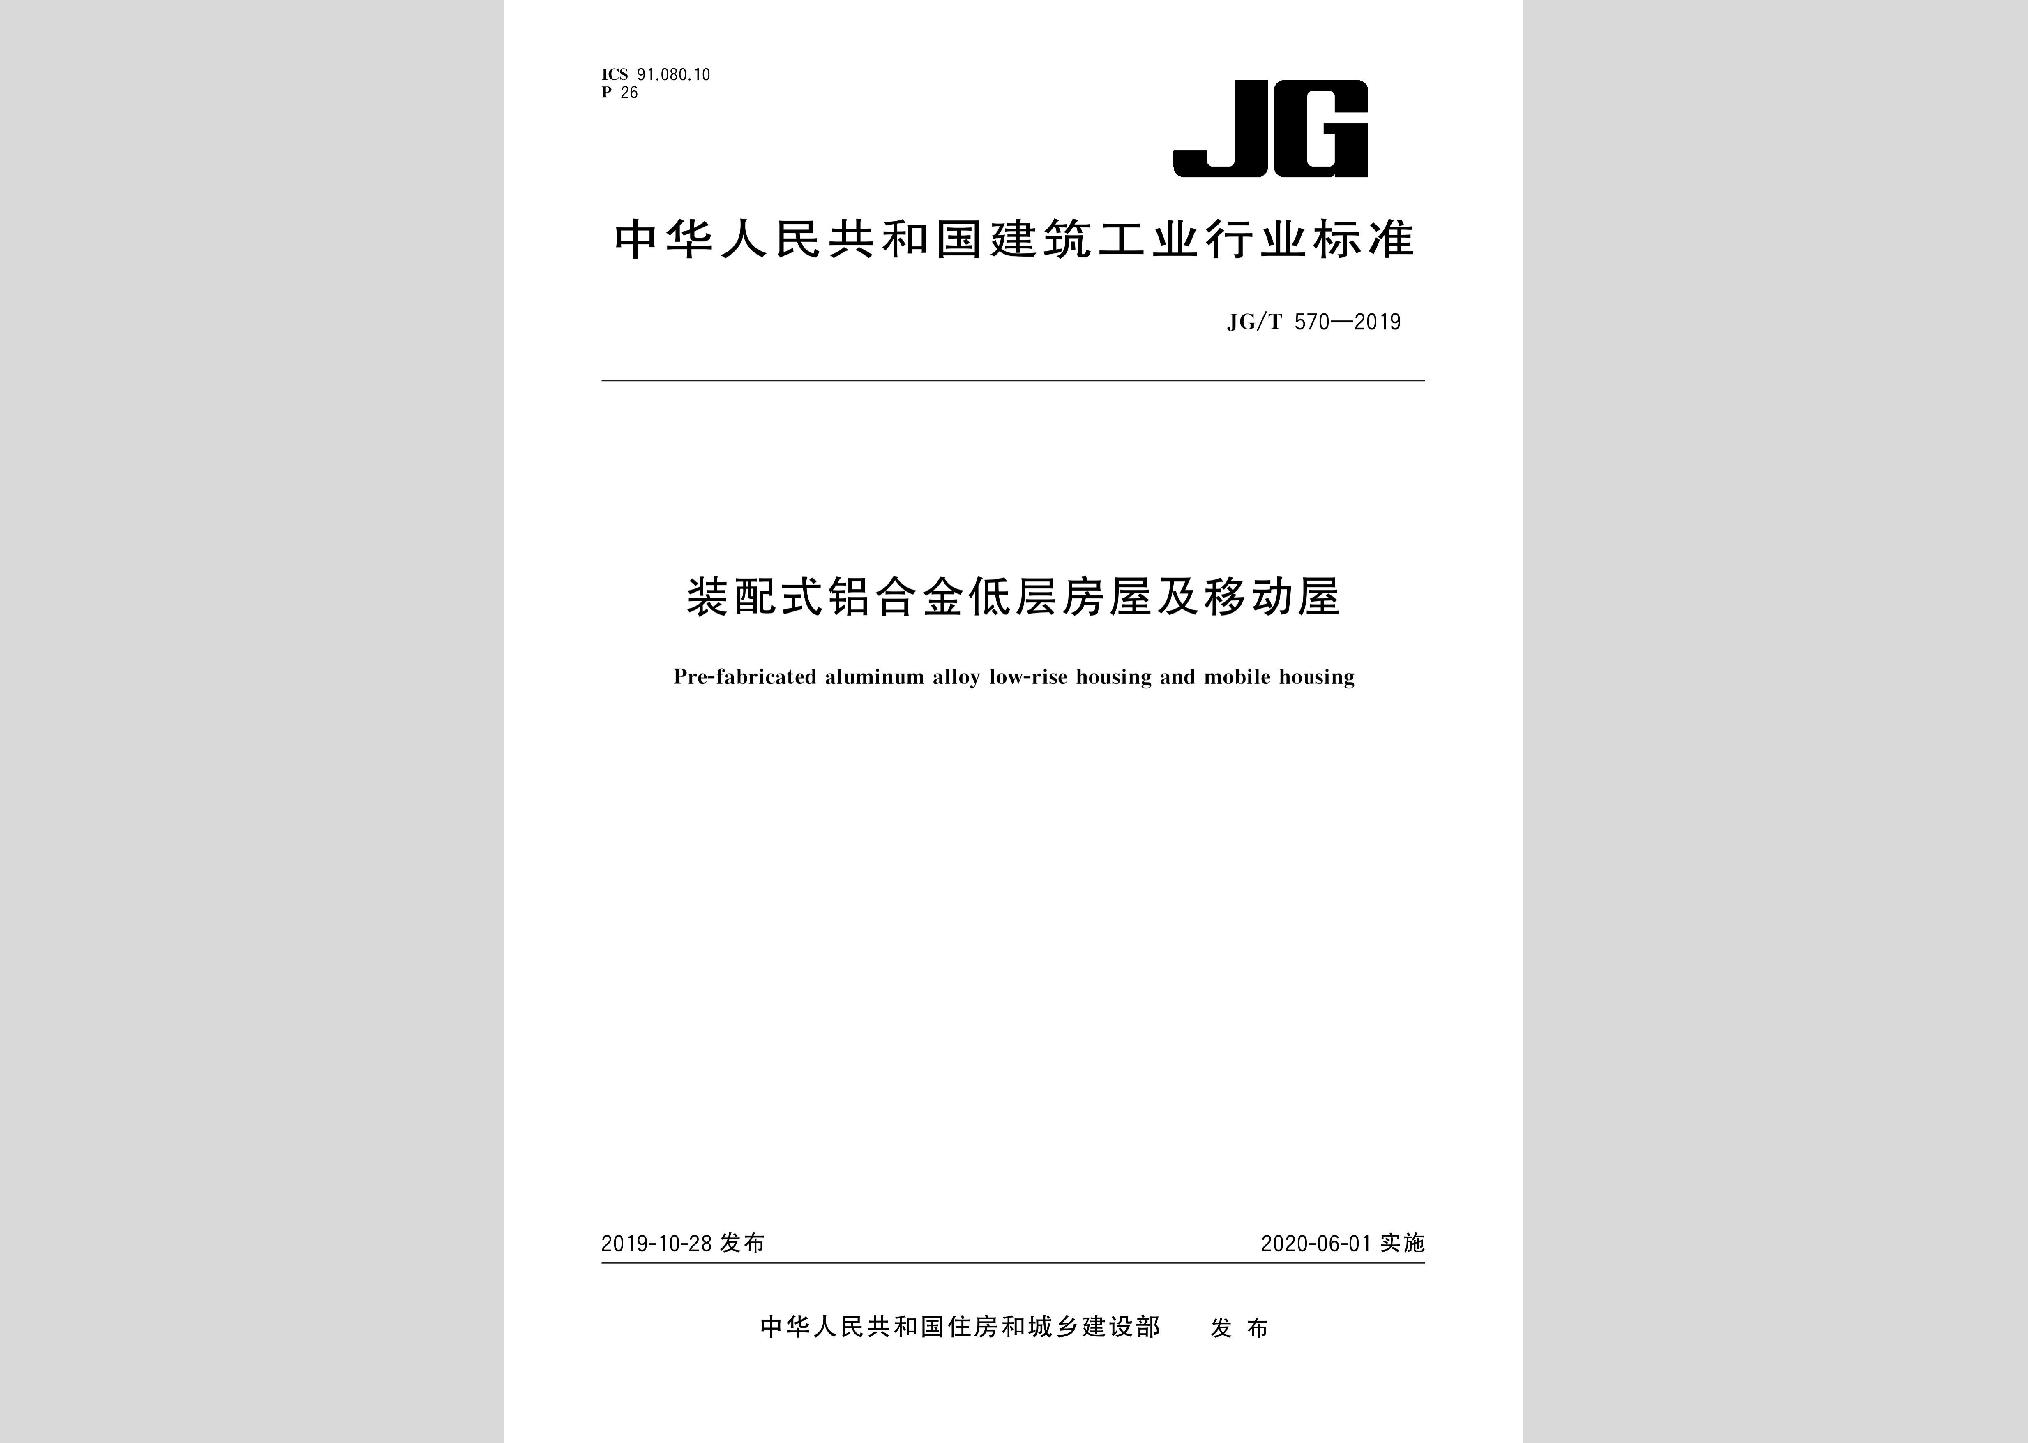 JG/T570-2019：装配式铝合金低层房屋及移动屋